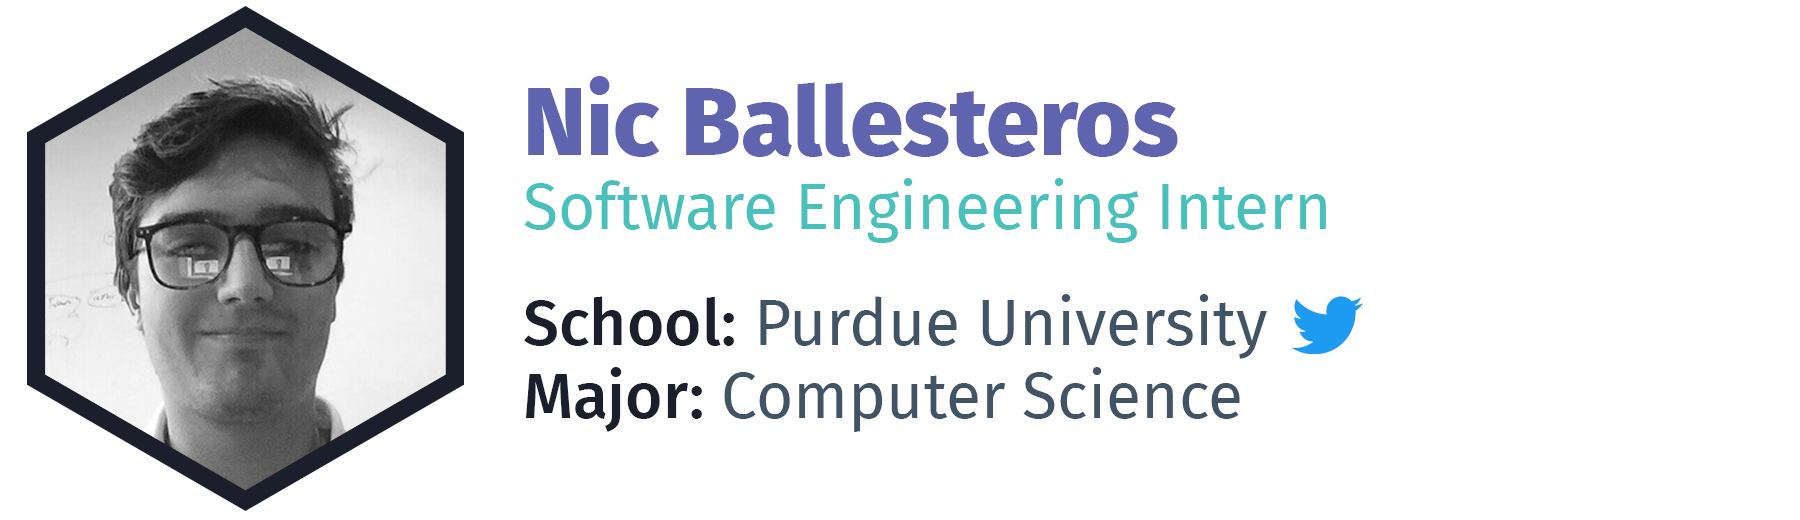 Nic Ballesteros - Software Engineering Intern